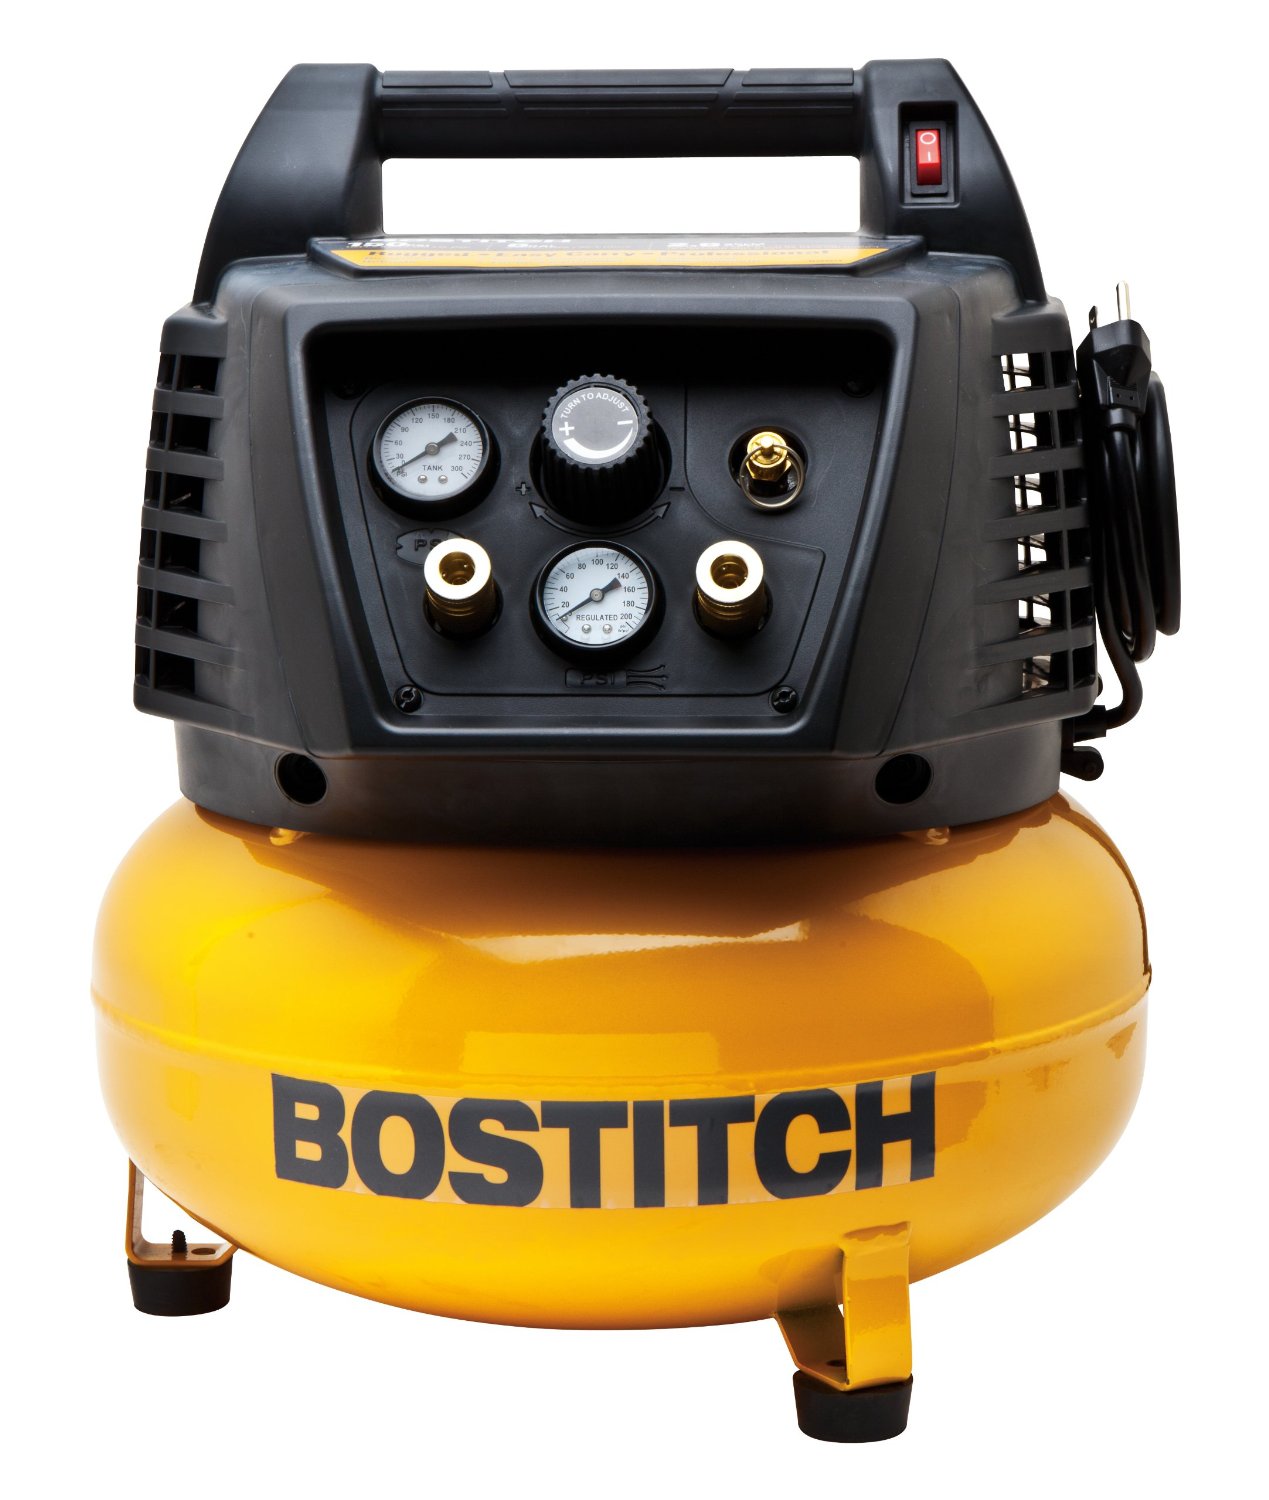 Bostitch Pancake Compressor